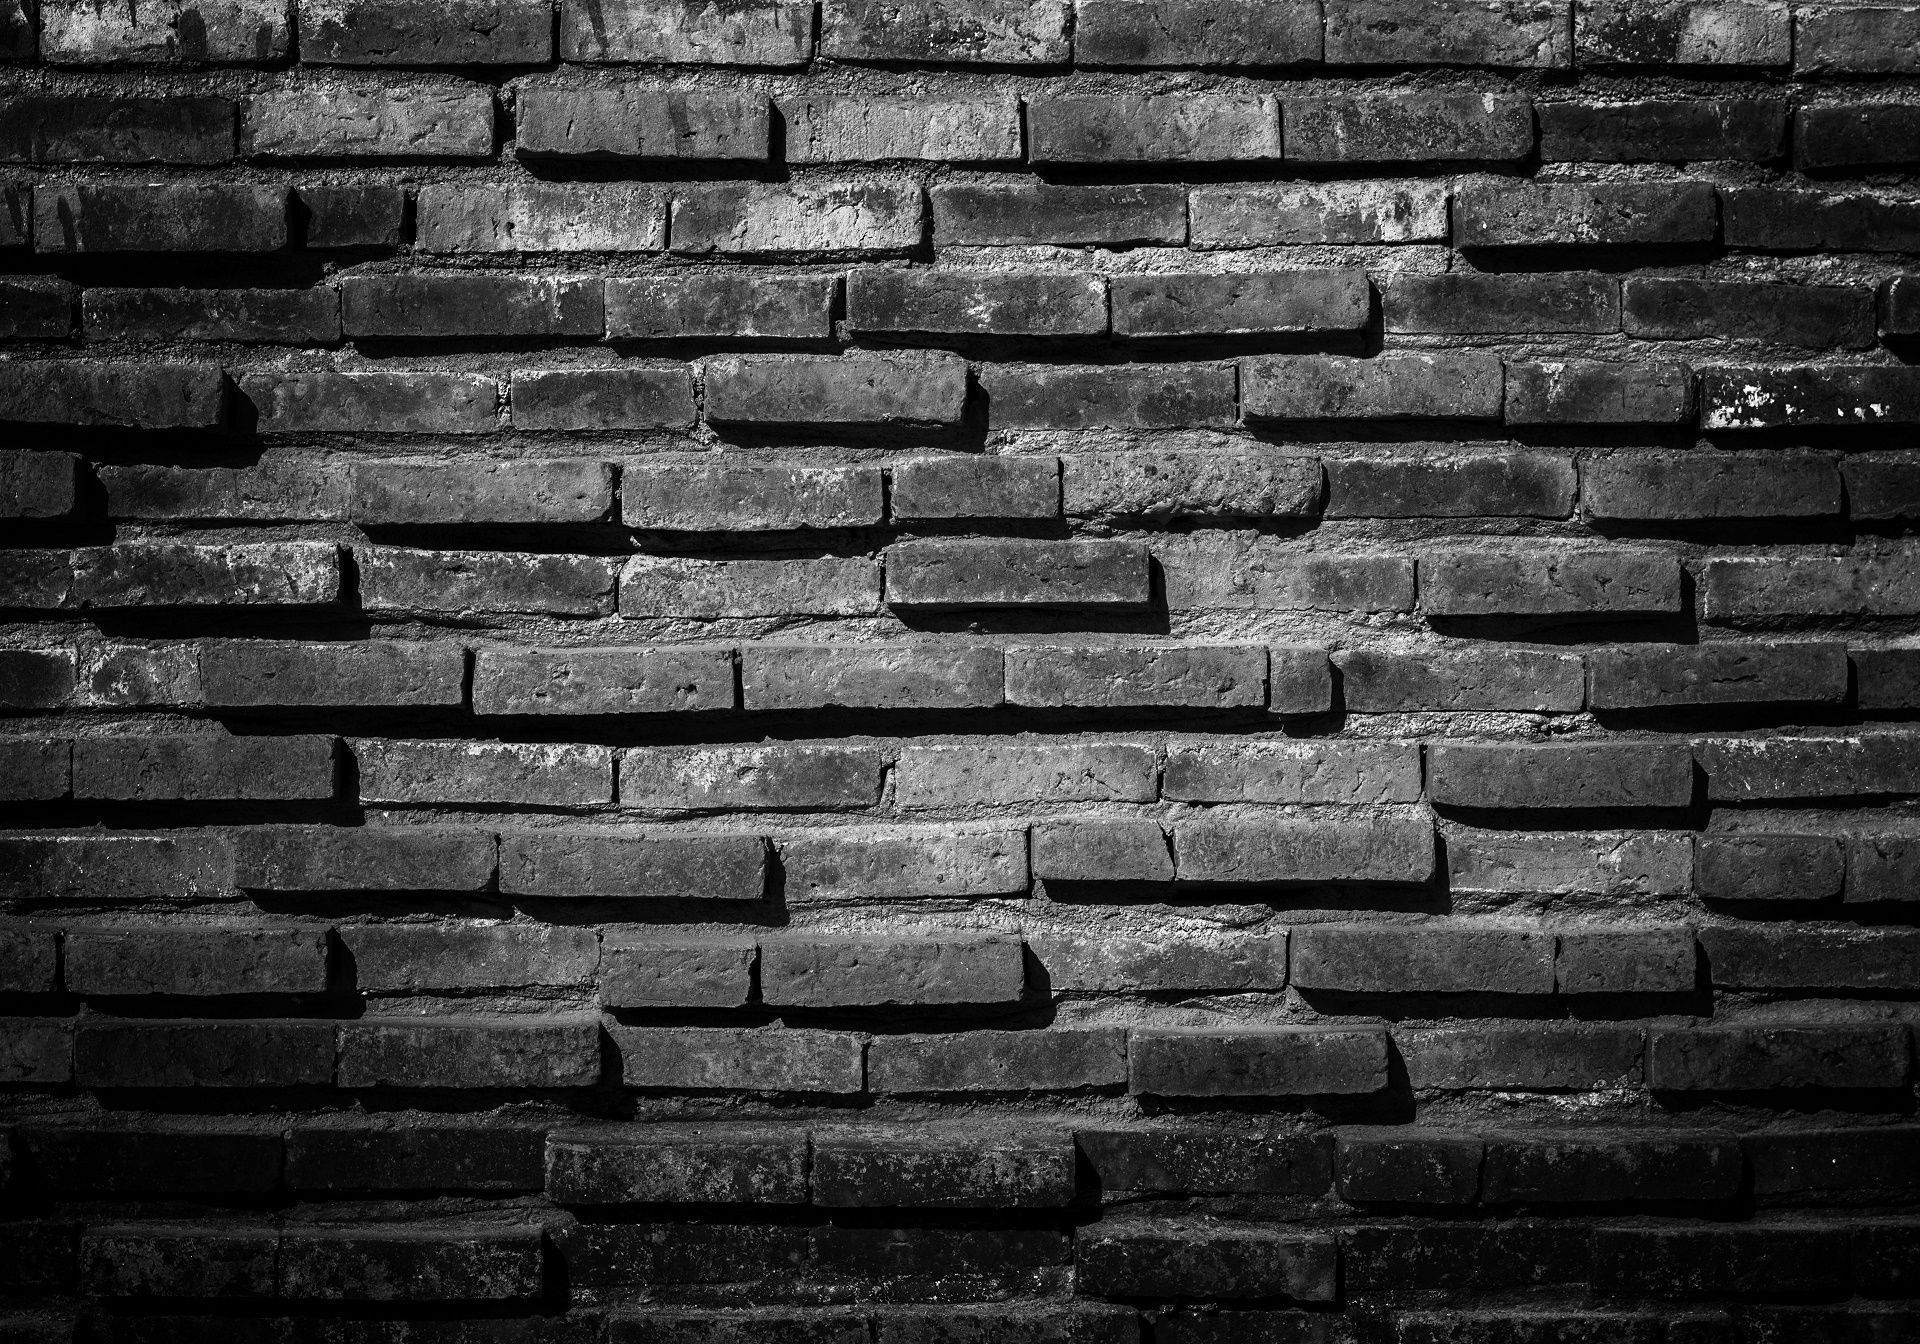 brick wallpaper,brickwork,brick,wall,stone wall,photography